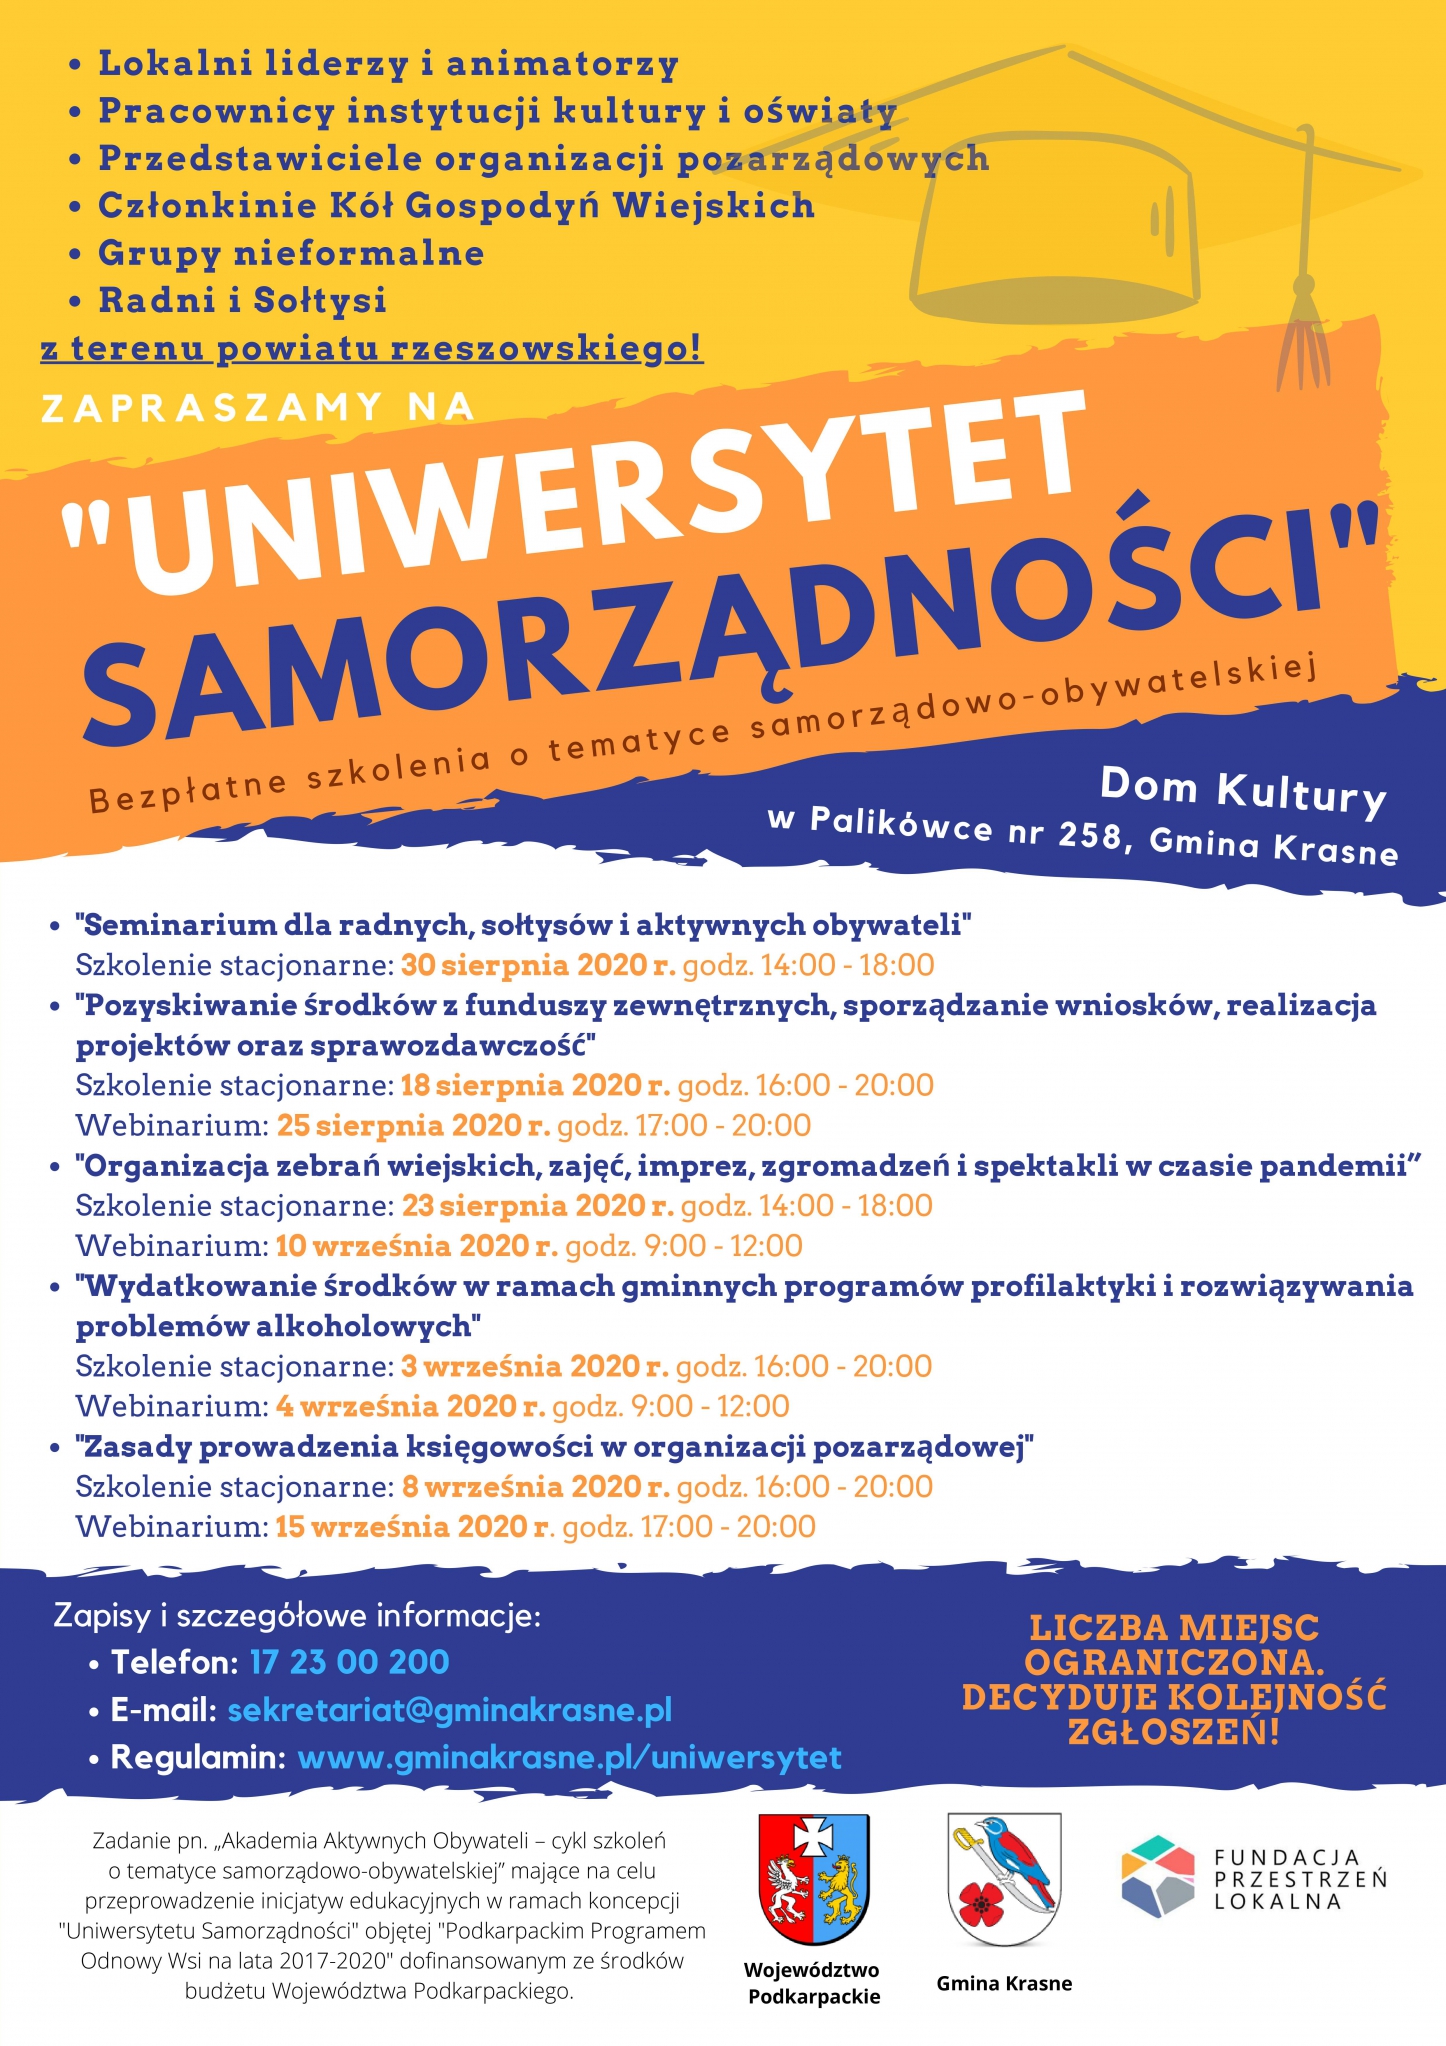 https://powiat.rzeszowski.pl/blog/2020/08/11/uniwersytet-samorzadnosci/0001-jpg/